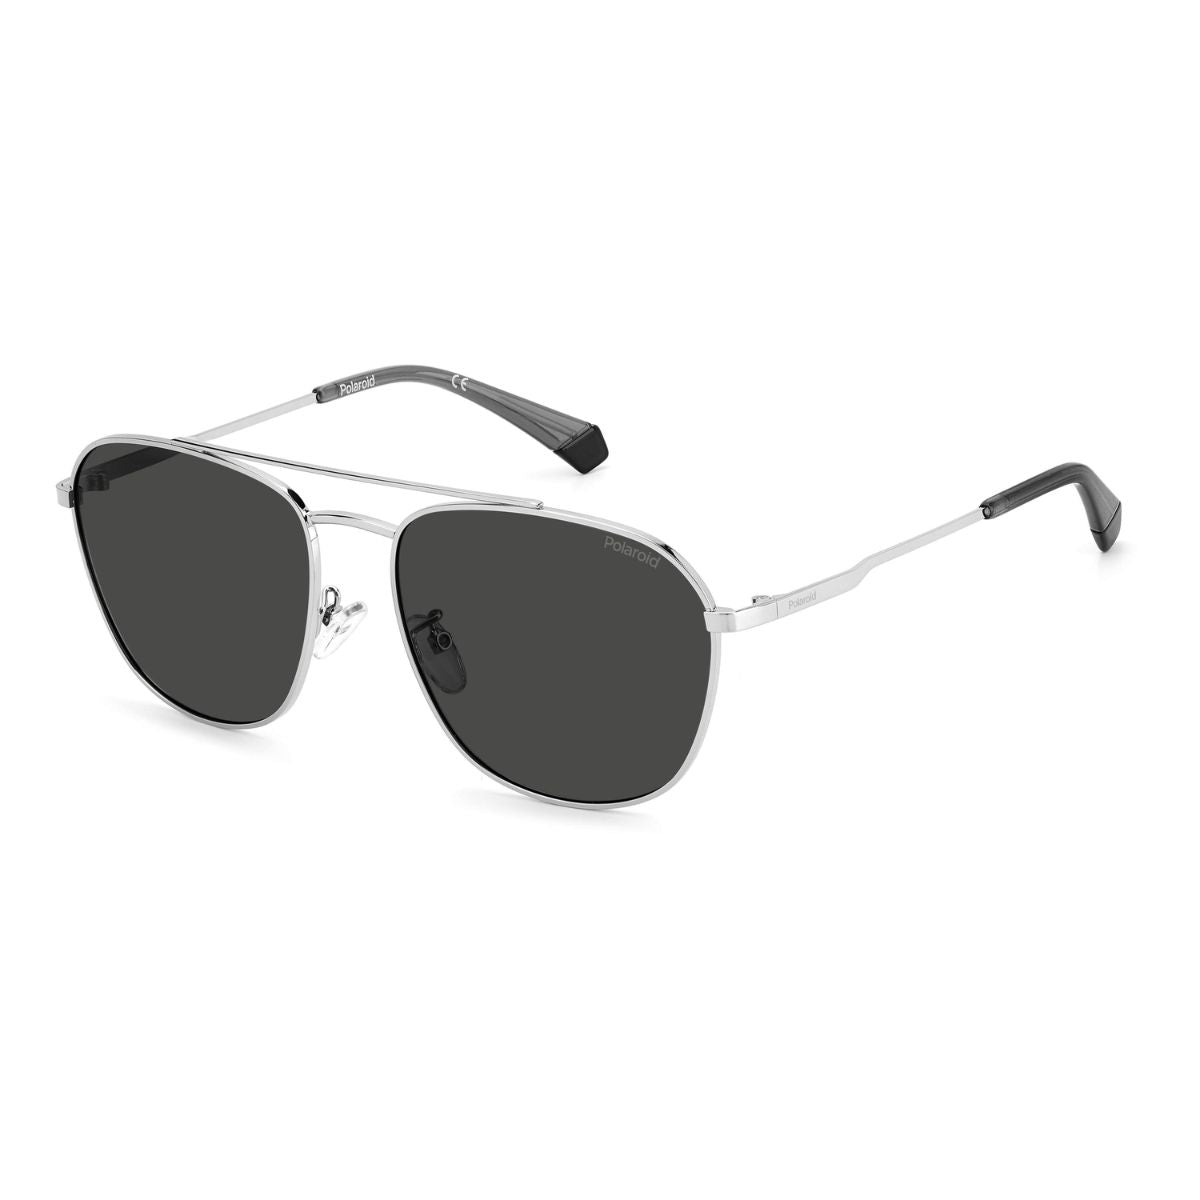 "Top-Rated Polaroid 4127 Polarized Sunglasses For Mens At Optorium"